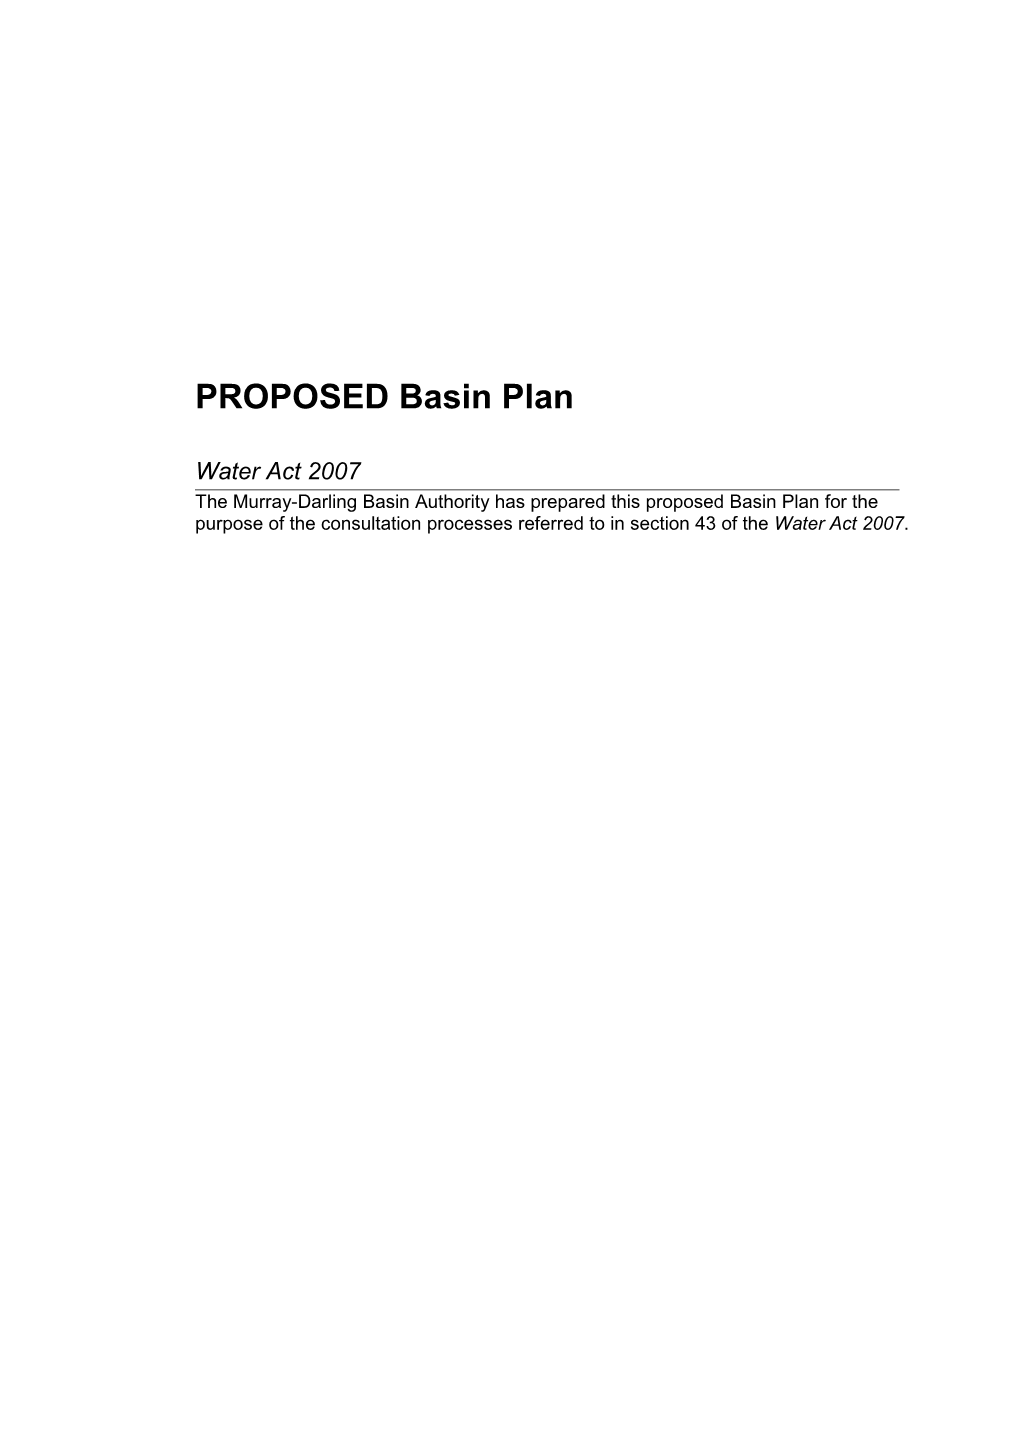 PROPOSED Basin Plan Water ACT 2007